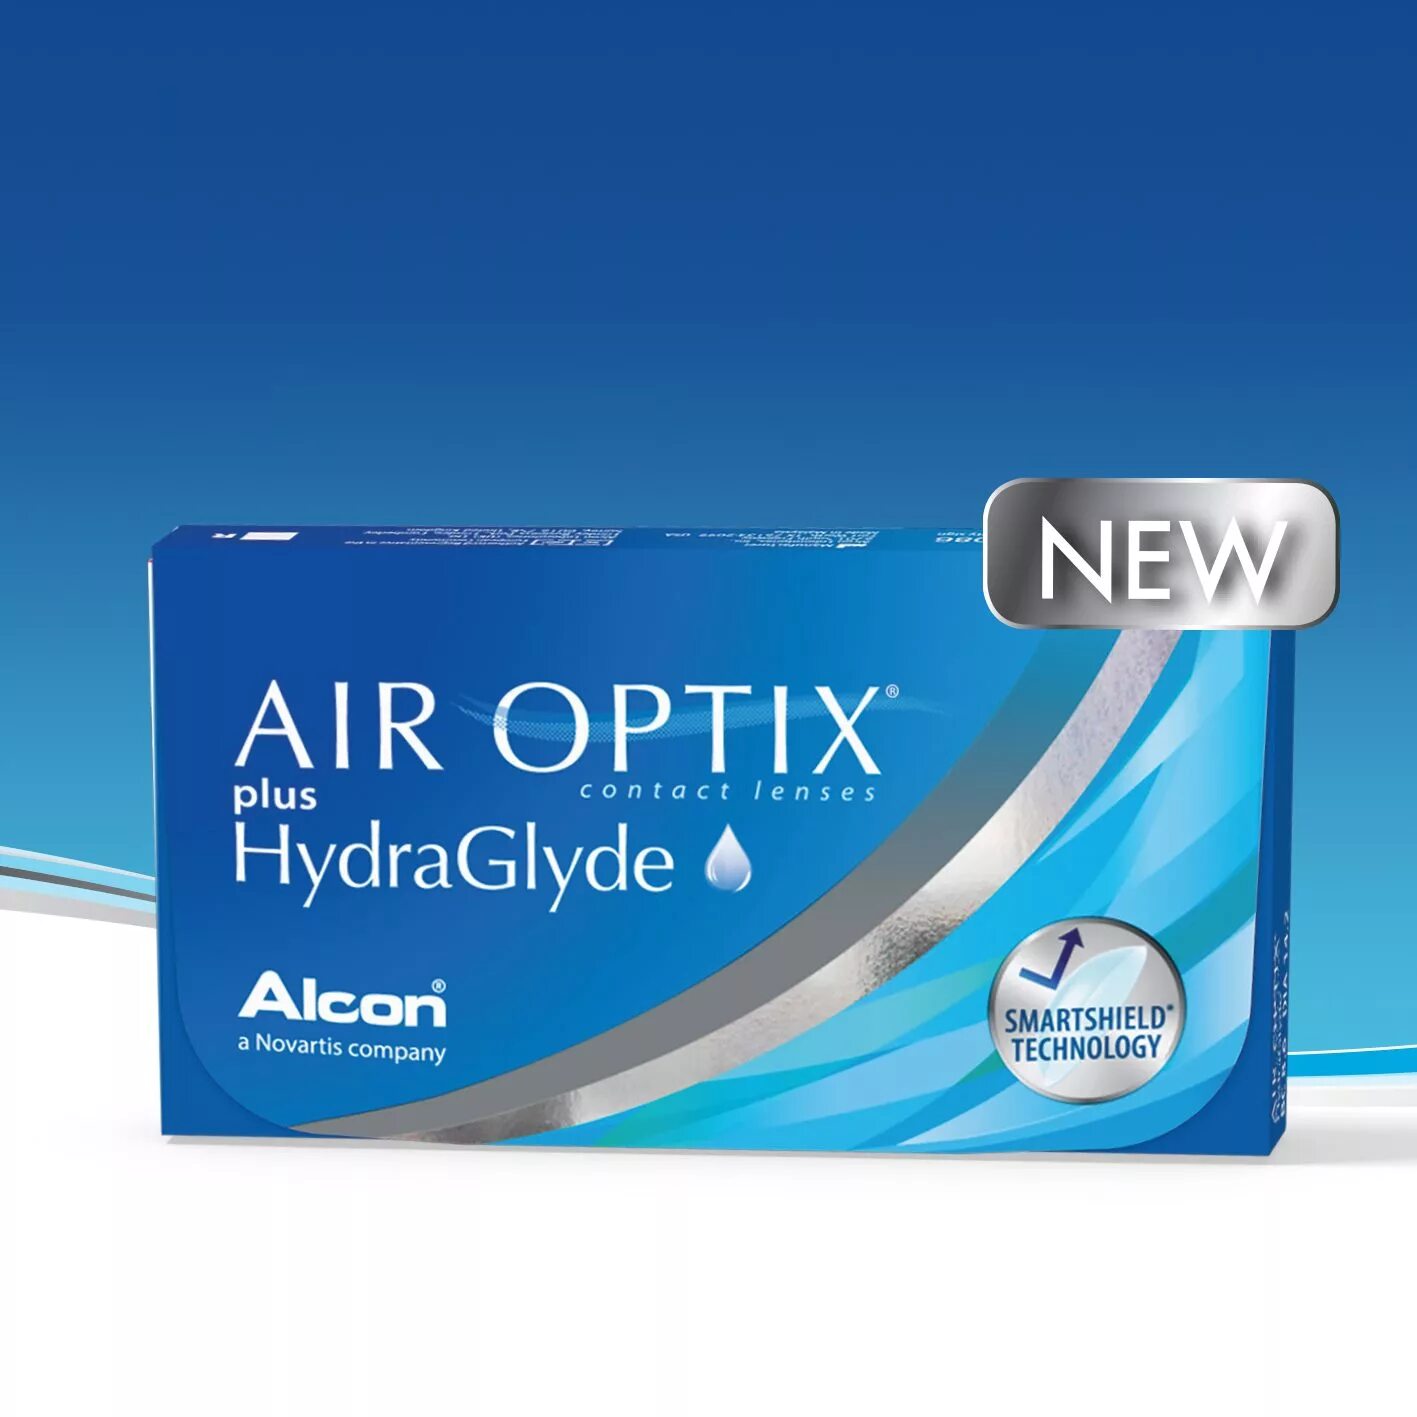 Air Optix Plus HYDRAGLYDE 6 линз. Air Optix Plus HYDRAGLYDE 3 шт. Линзы Alcon Air Optix Plus HYDRAGLYDE. Air Optix Plus HYDRAGLYDE 3 линзы.